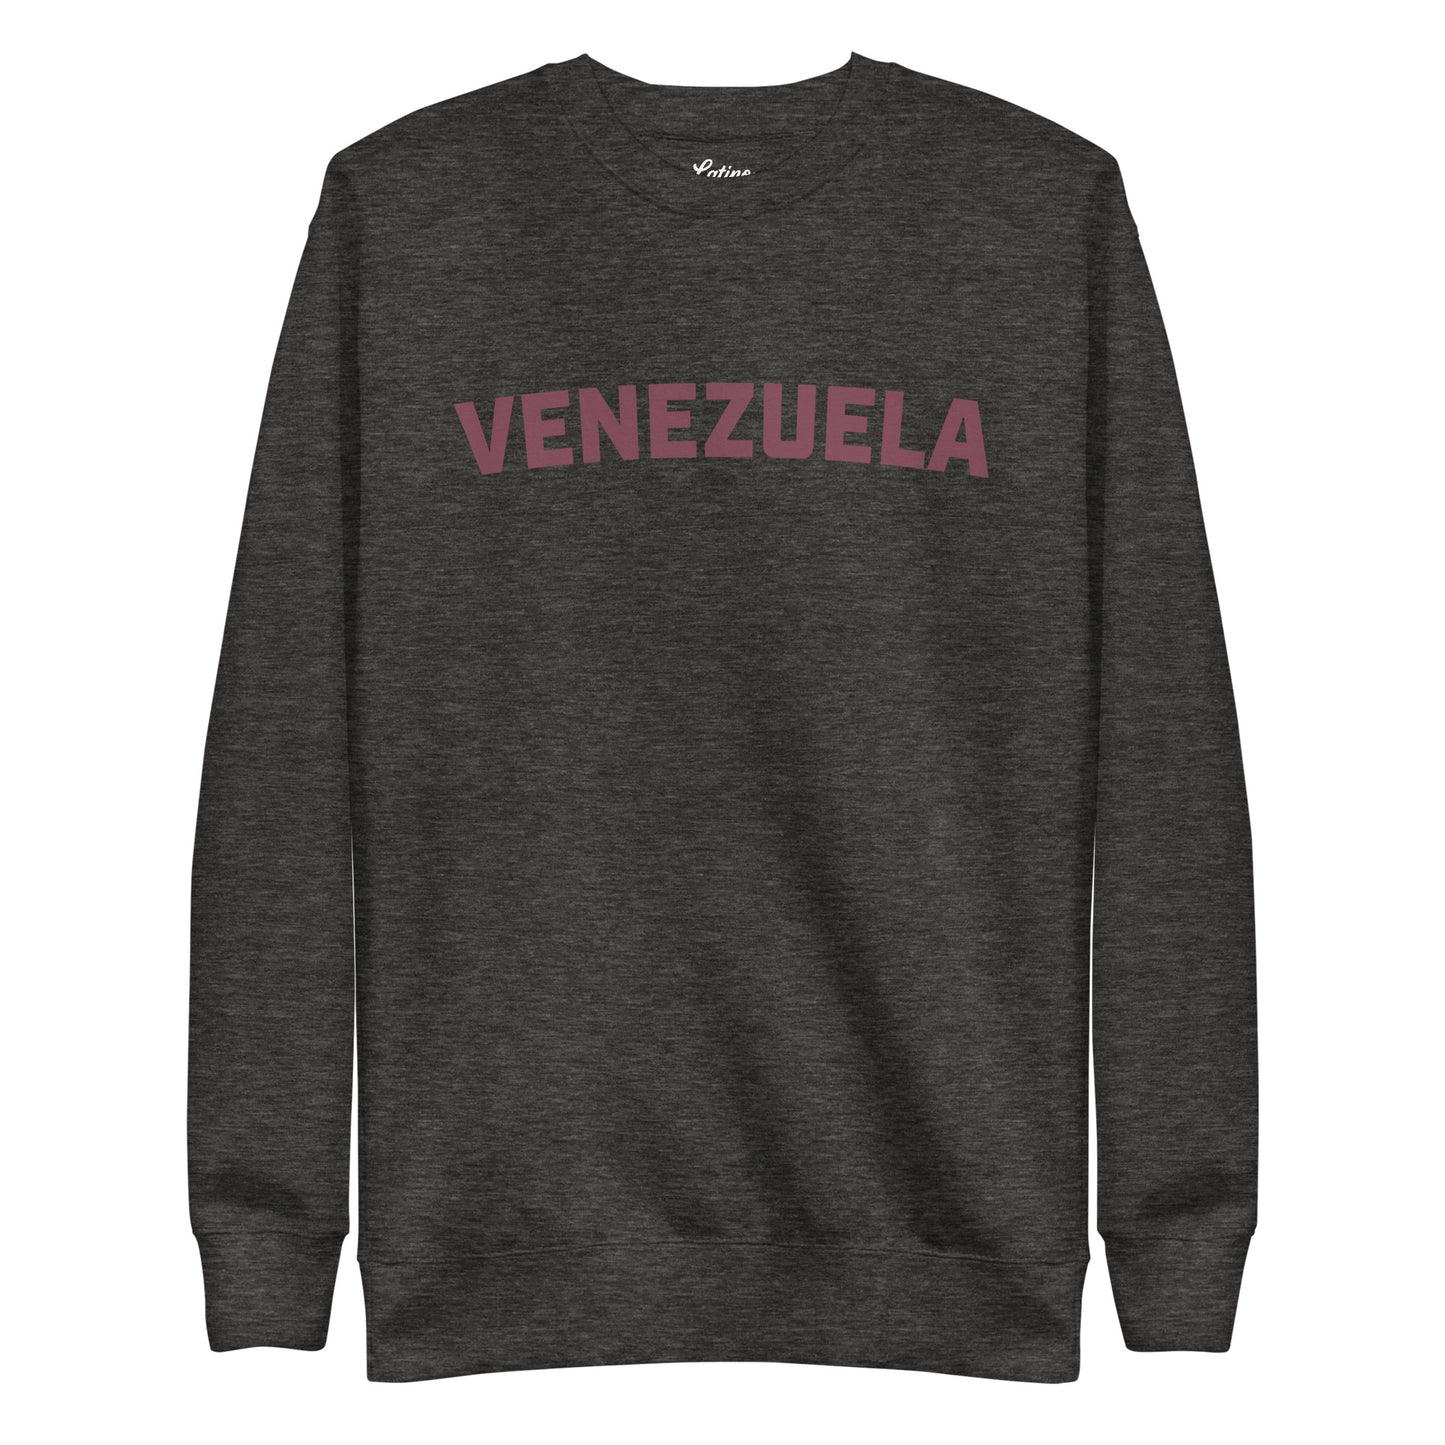 🇻🇪 Venezuela Sweatshirt